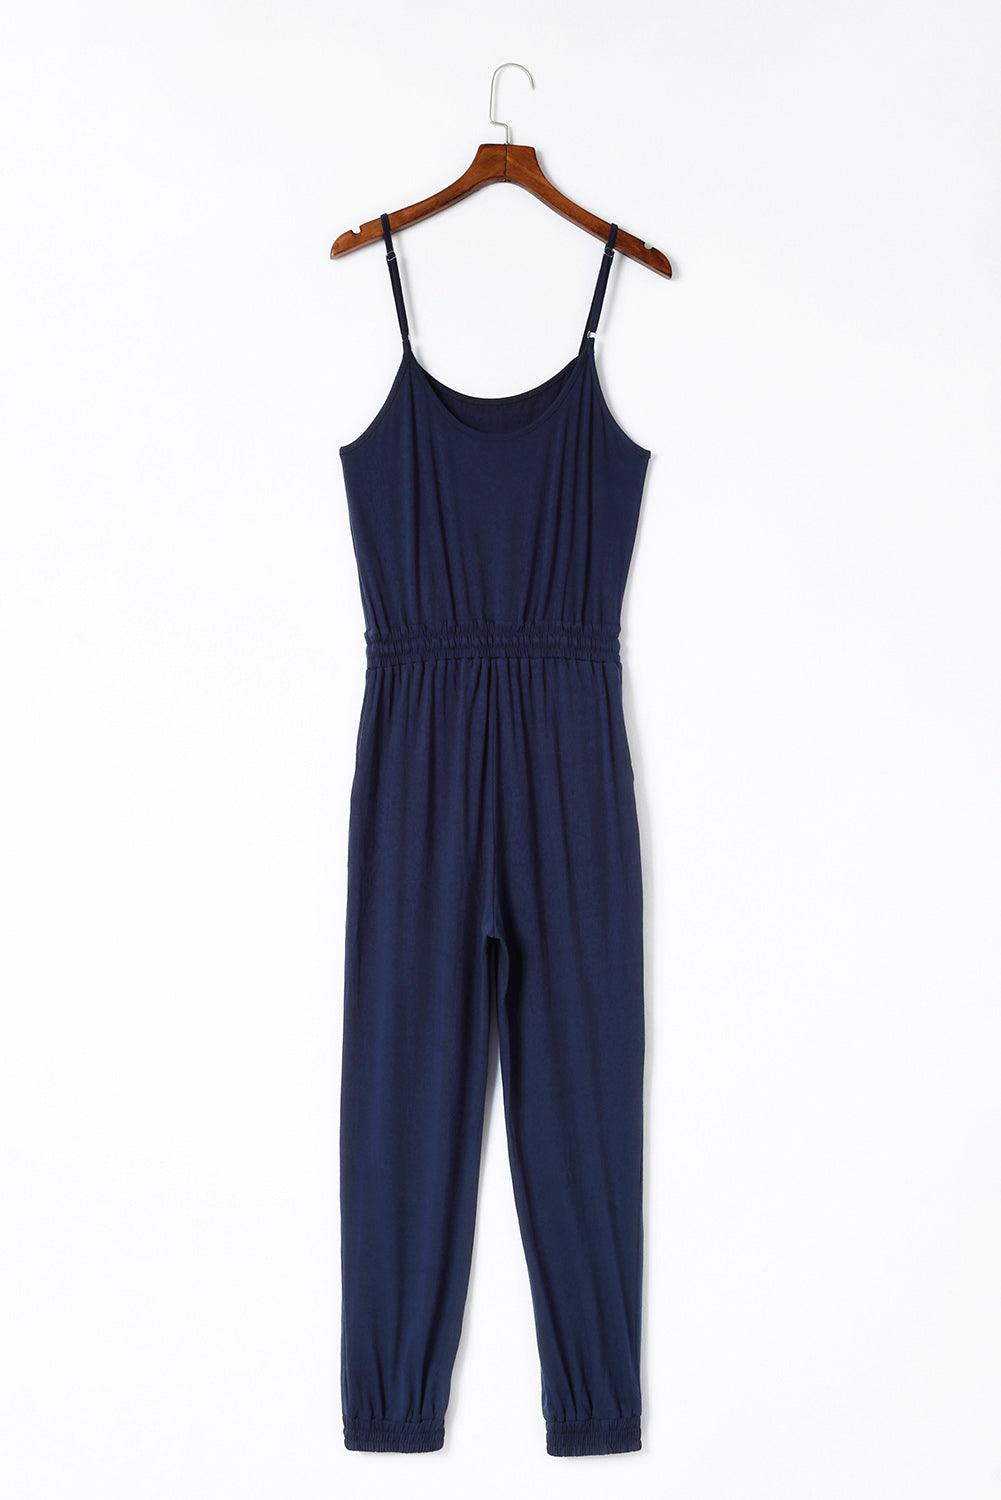 Dark Blue Pockets Drawstring Waist Spaghetti Strap Jumpsuit - Vesteeto